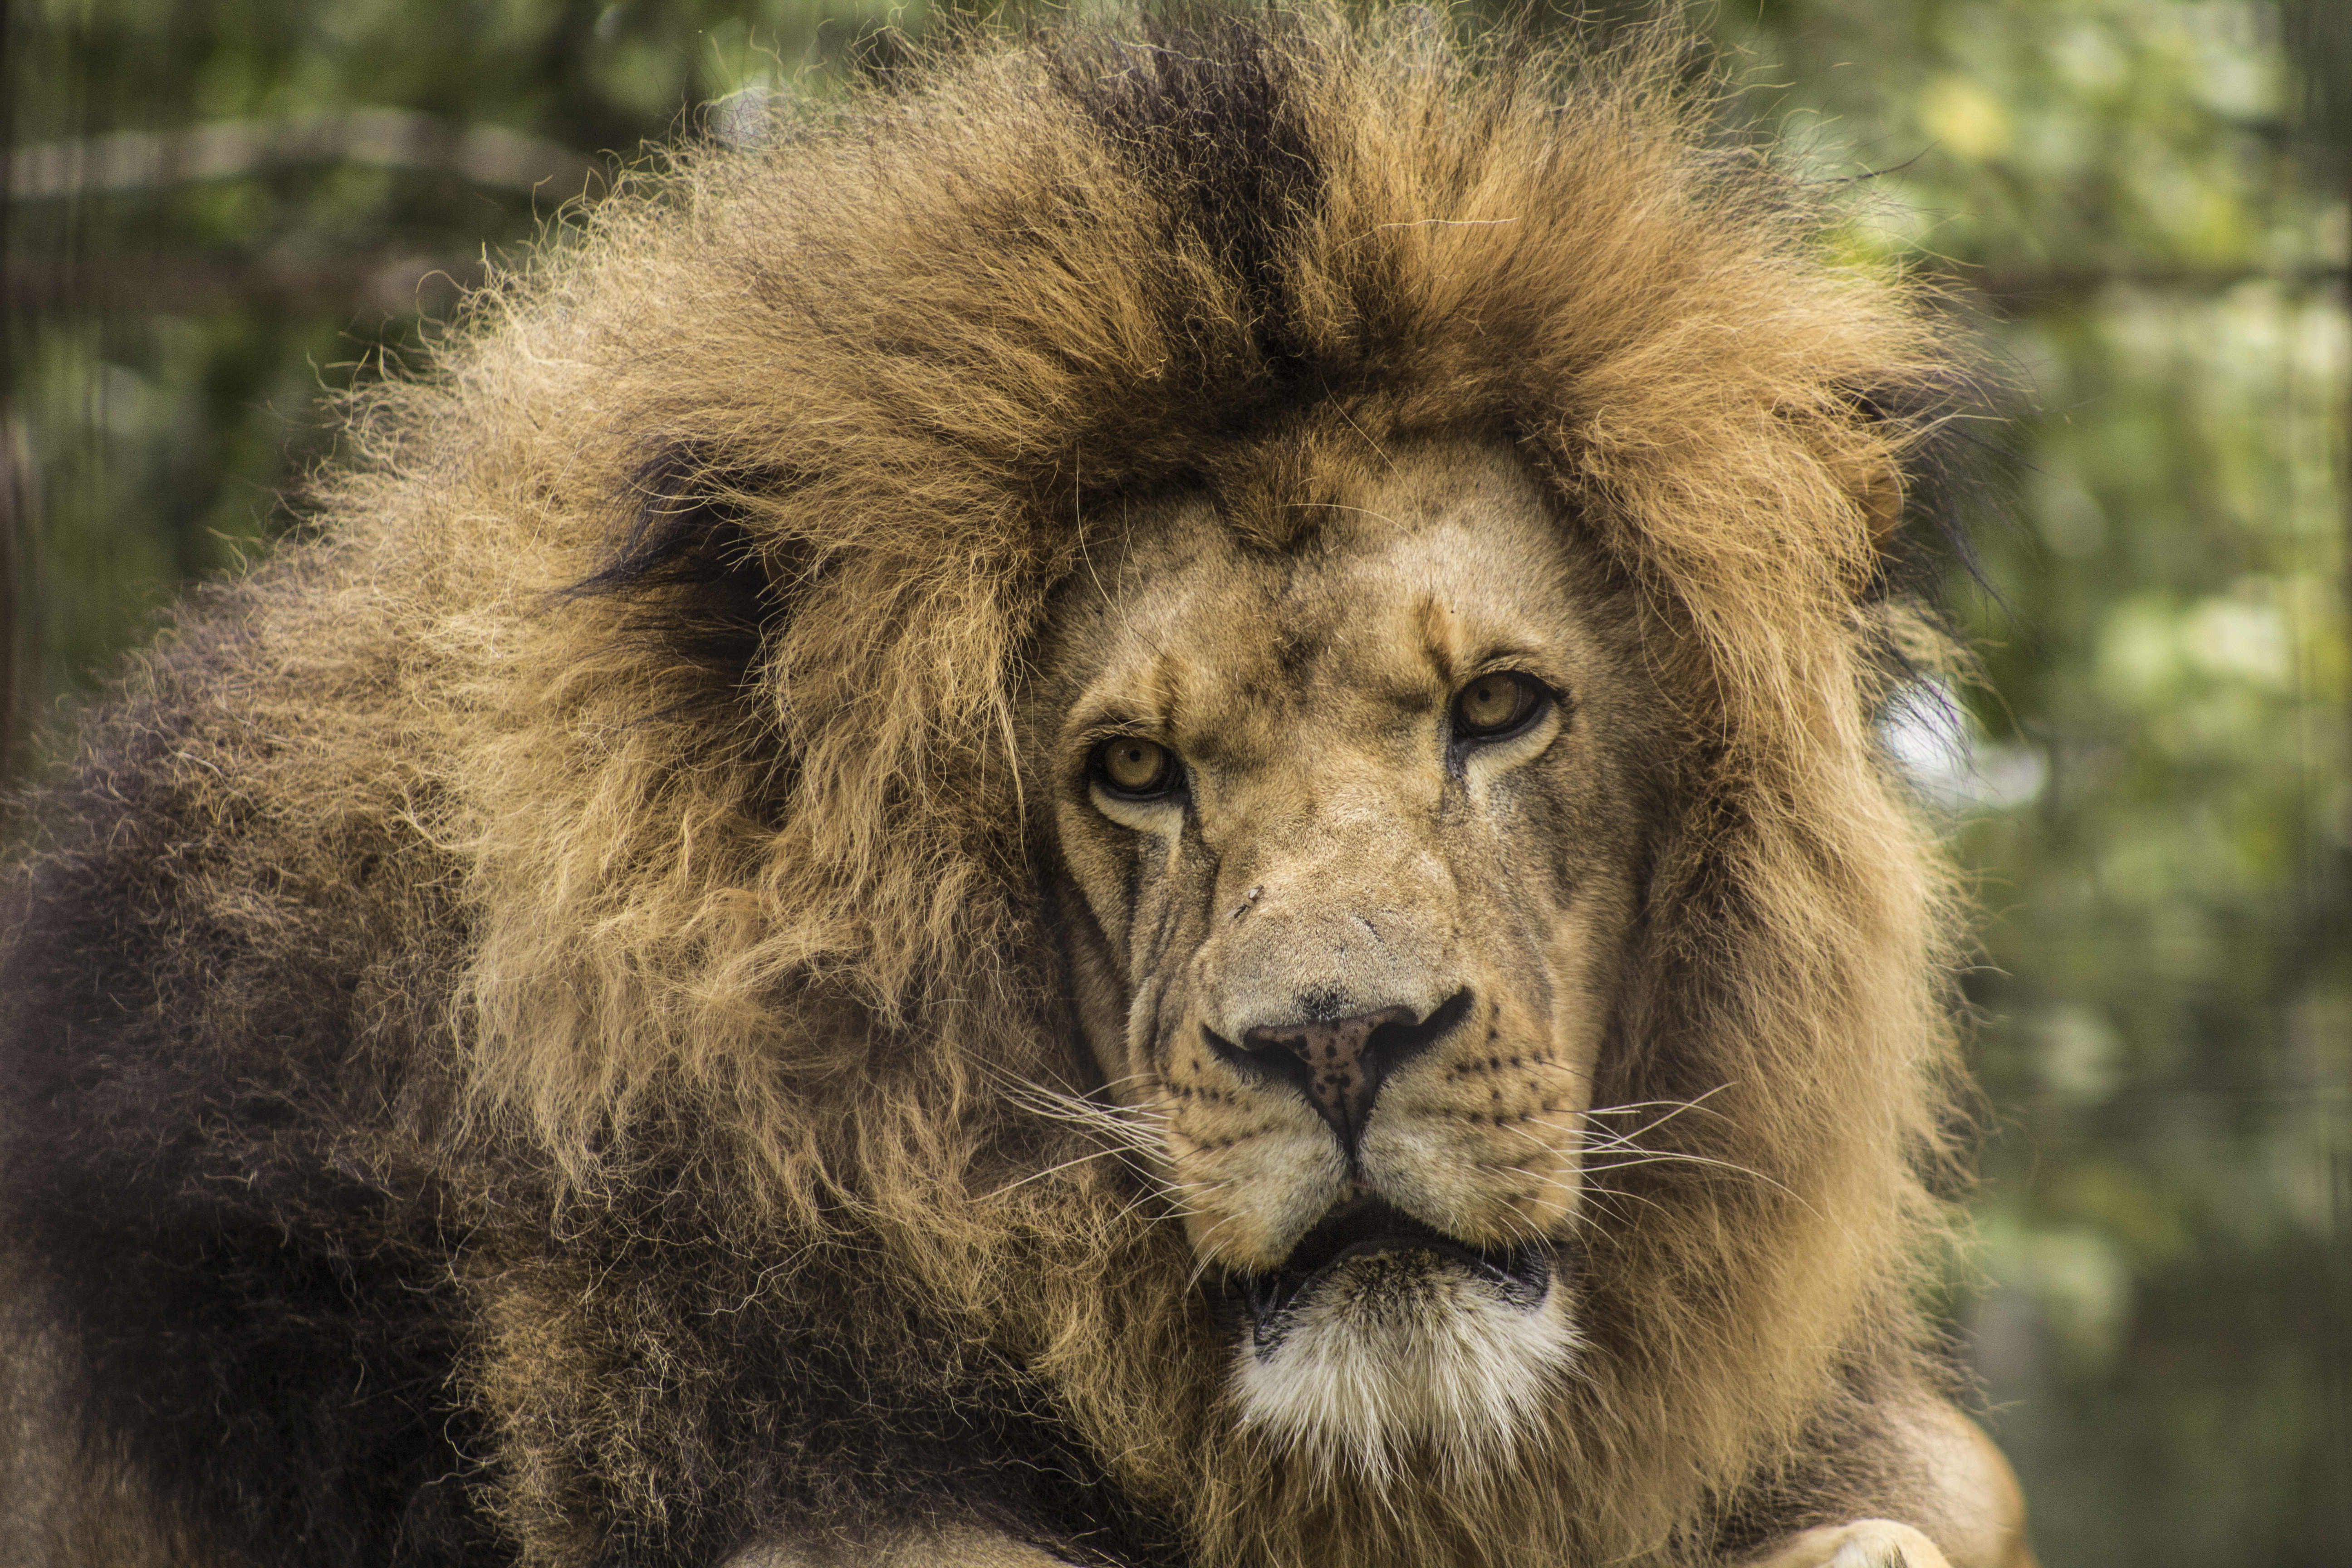 124918 descargar imagen león, animales, bozal, un leon, depredador, visión, opinión, melena: fondos de pantalla y protectores de pantalla gratis